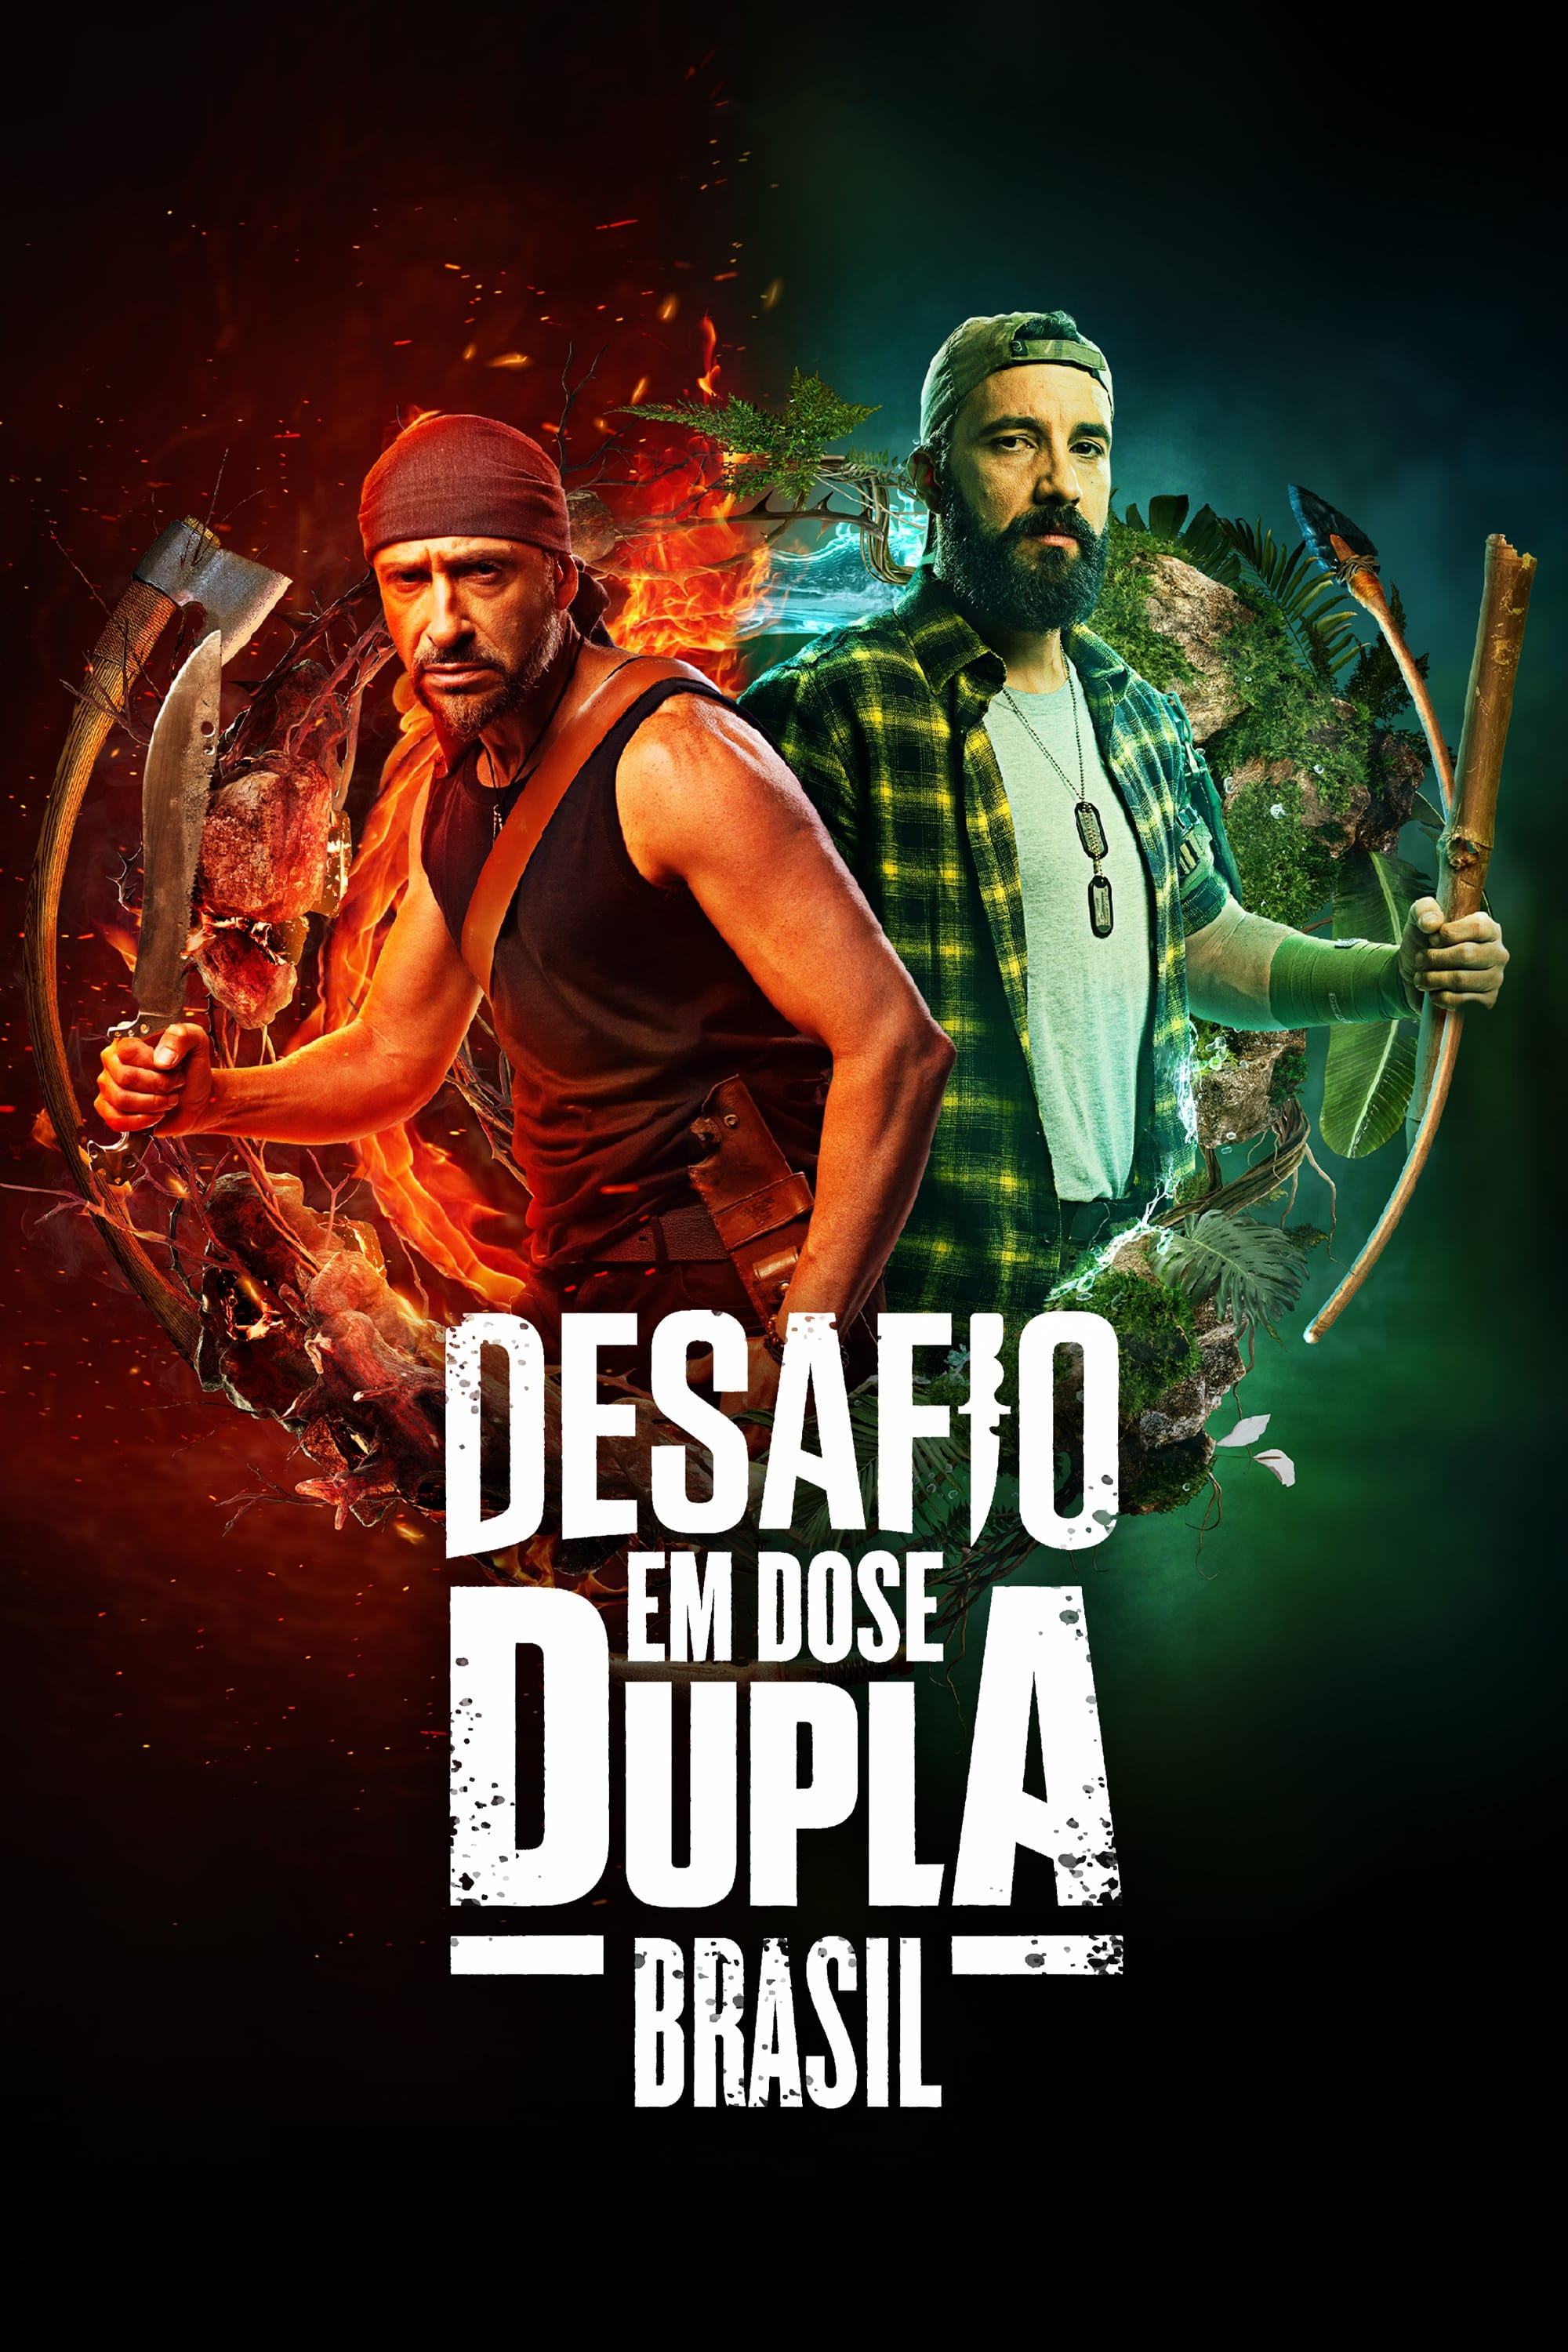 TV ratings for Dual Survival Brazil (Desafio Em Dose Dupla Brasil) in Russia. Discovery+ TV series